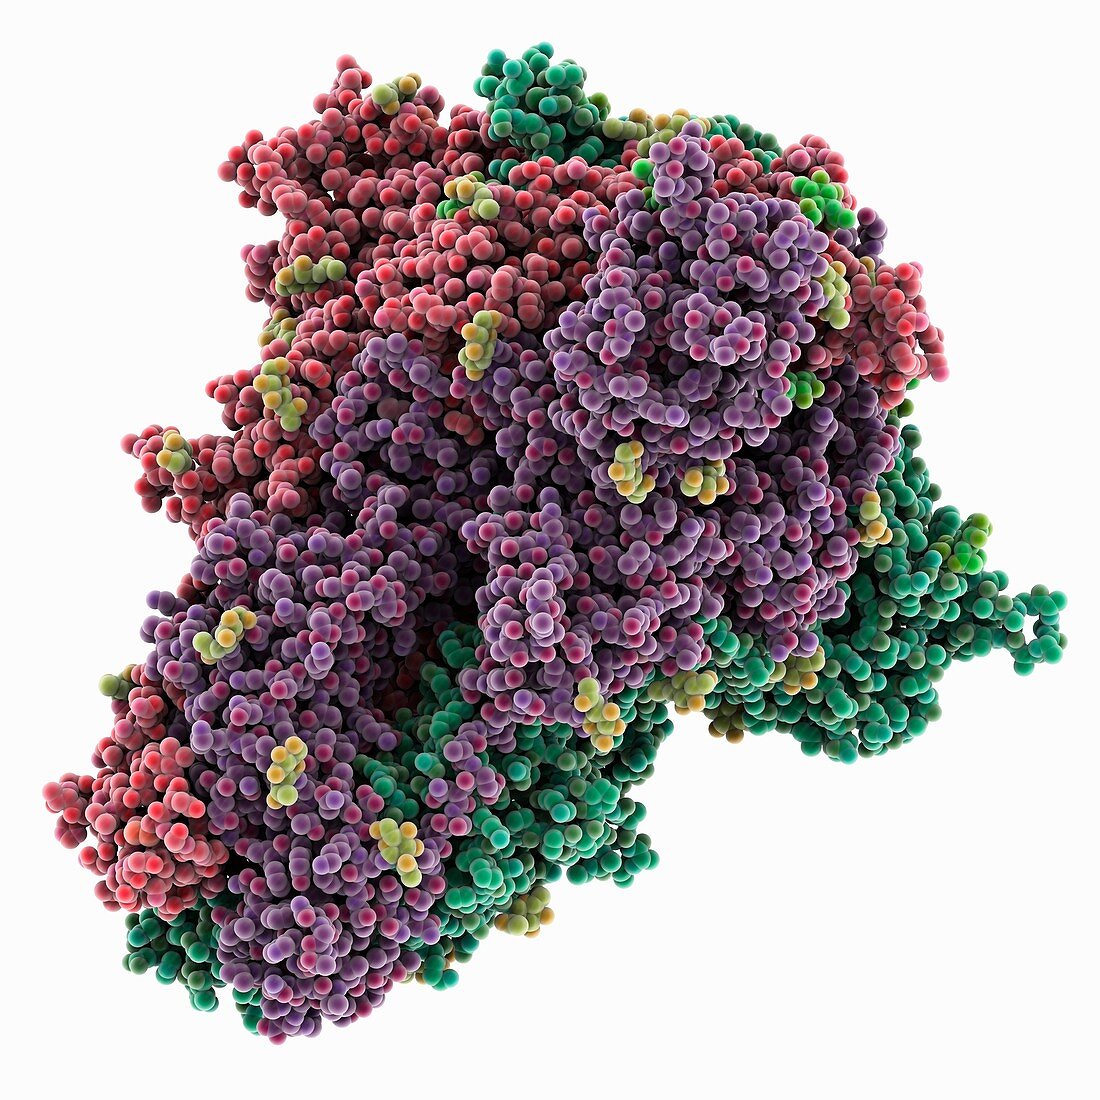 Bat coronavirus spike protein, molecular model